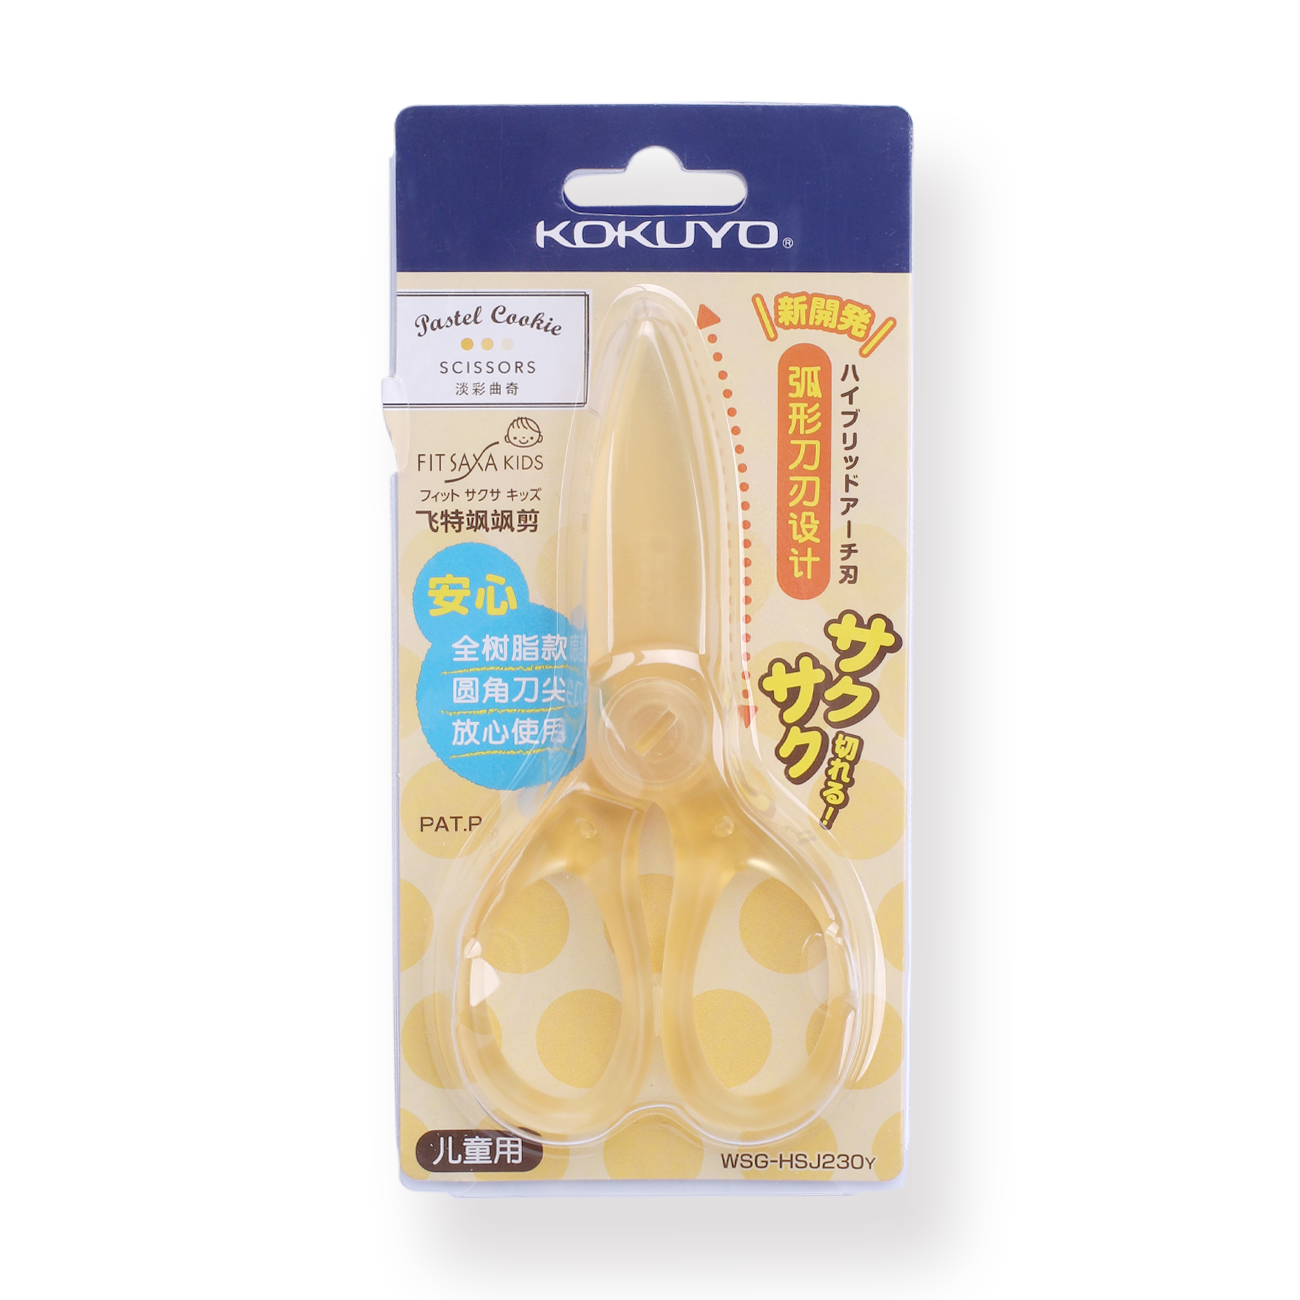 Kokuyo Pastel Cookie Scissors - Yellow